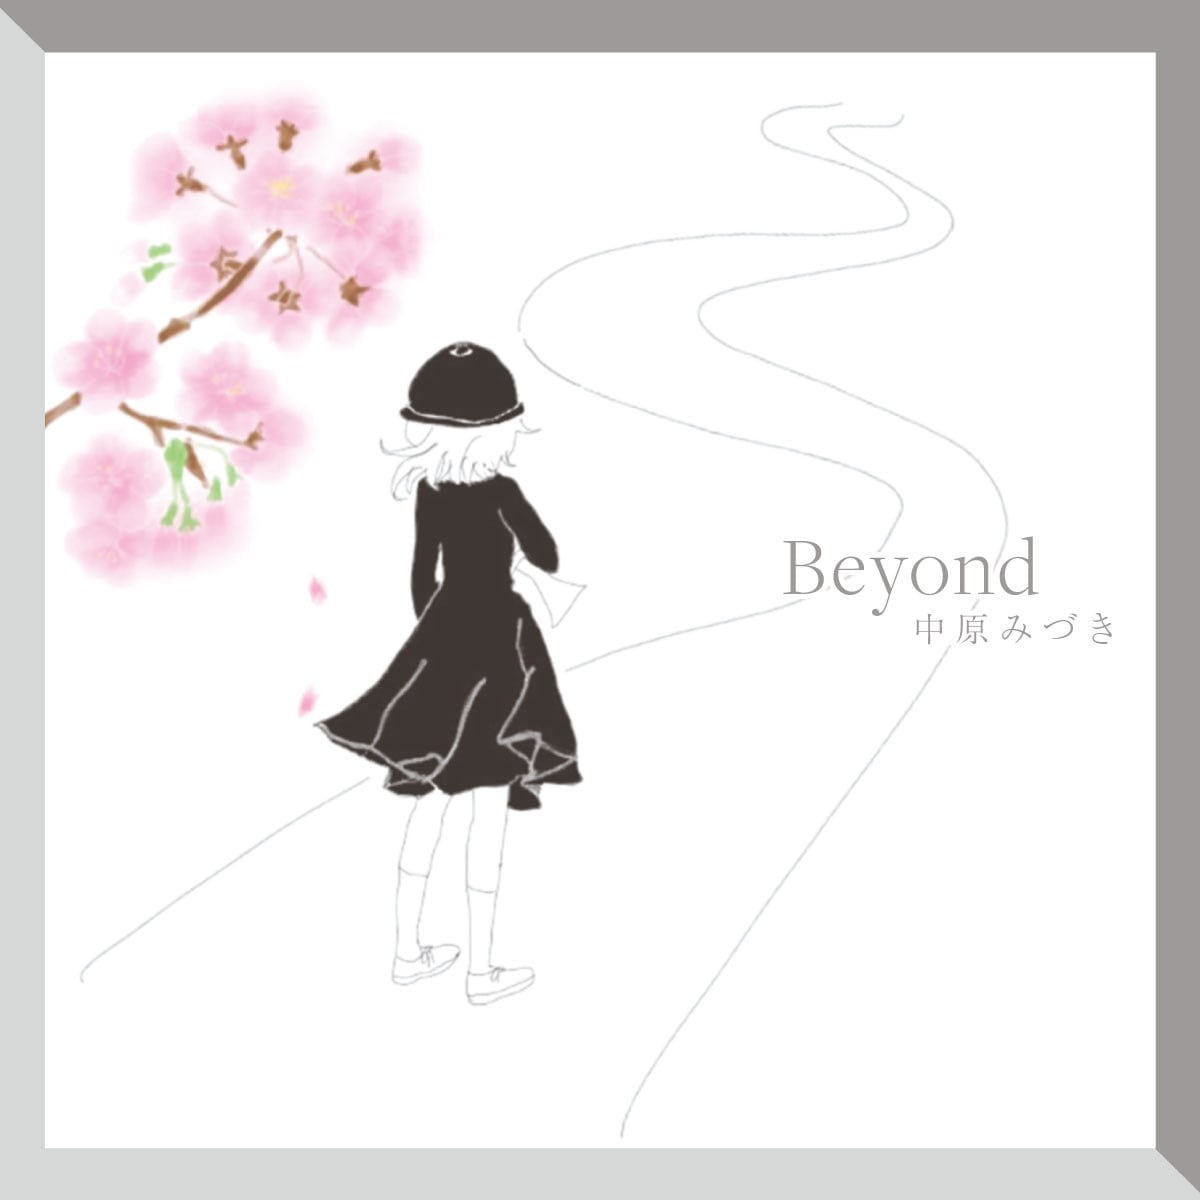 『Beyond』中原みづきオリジナルトランペットインストCD